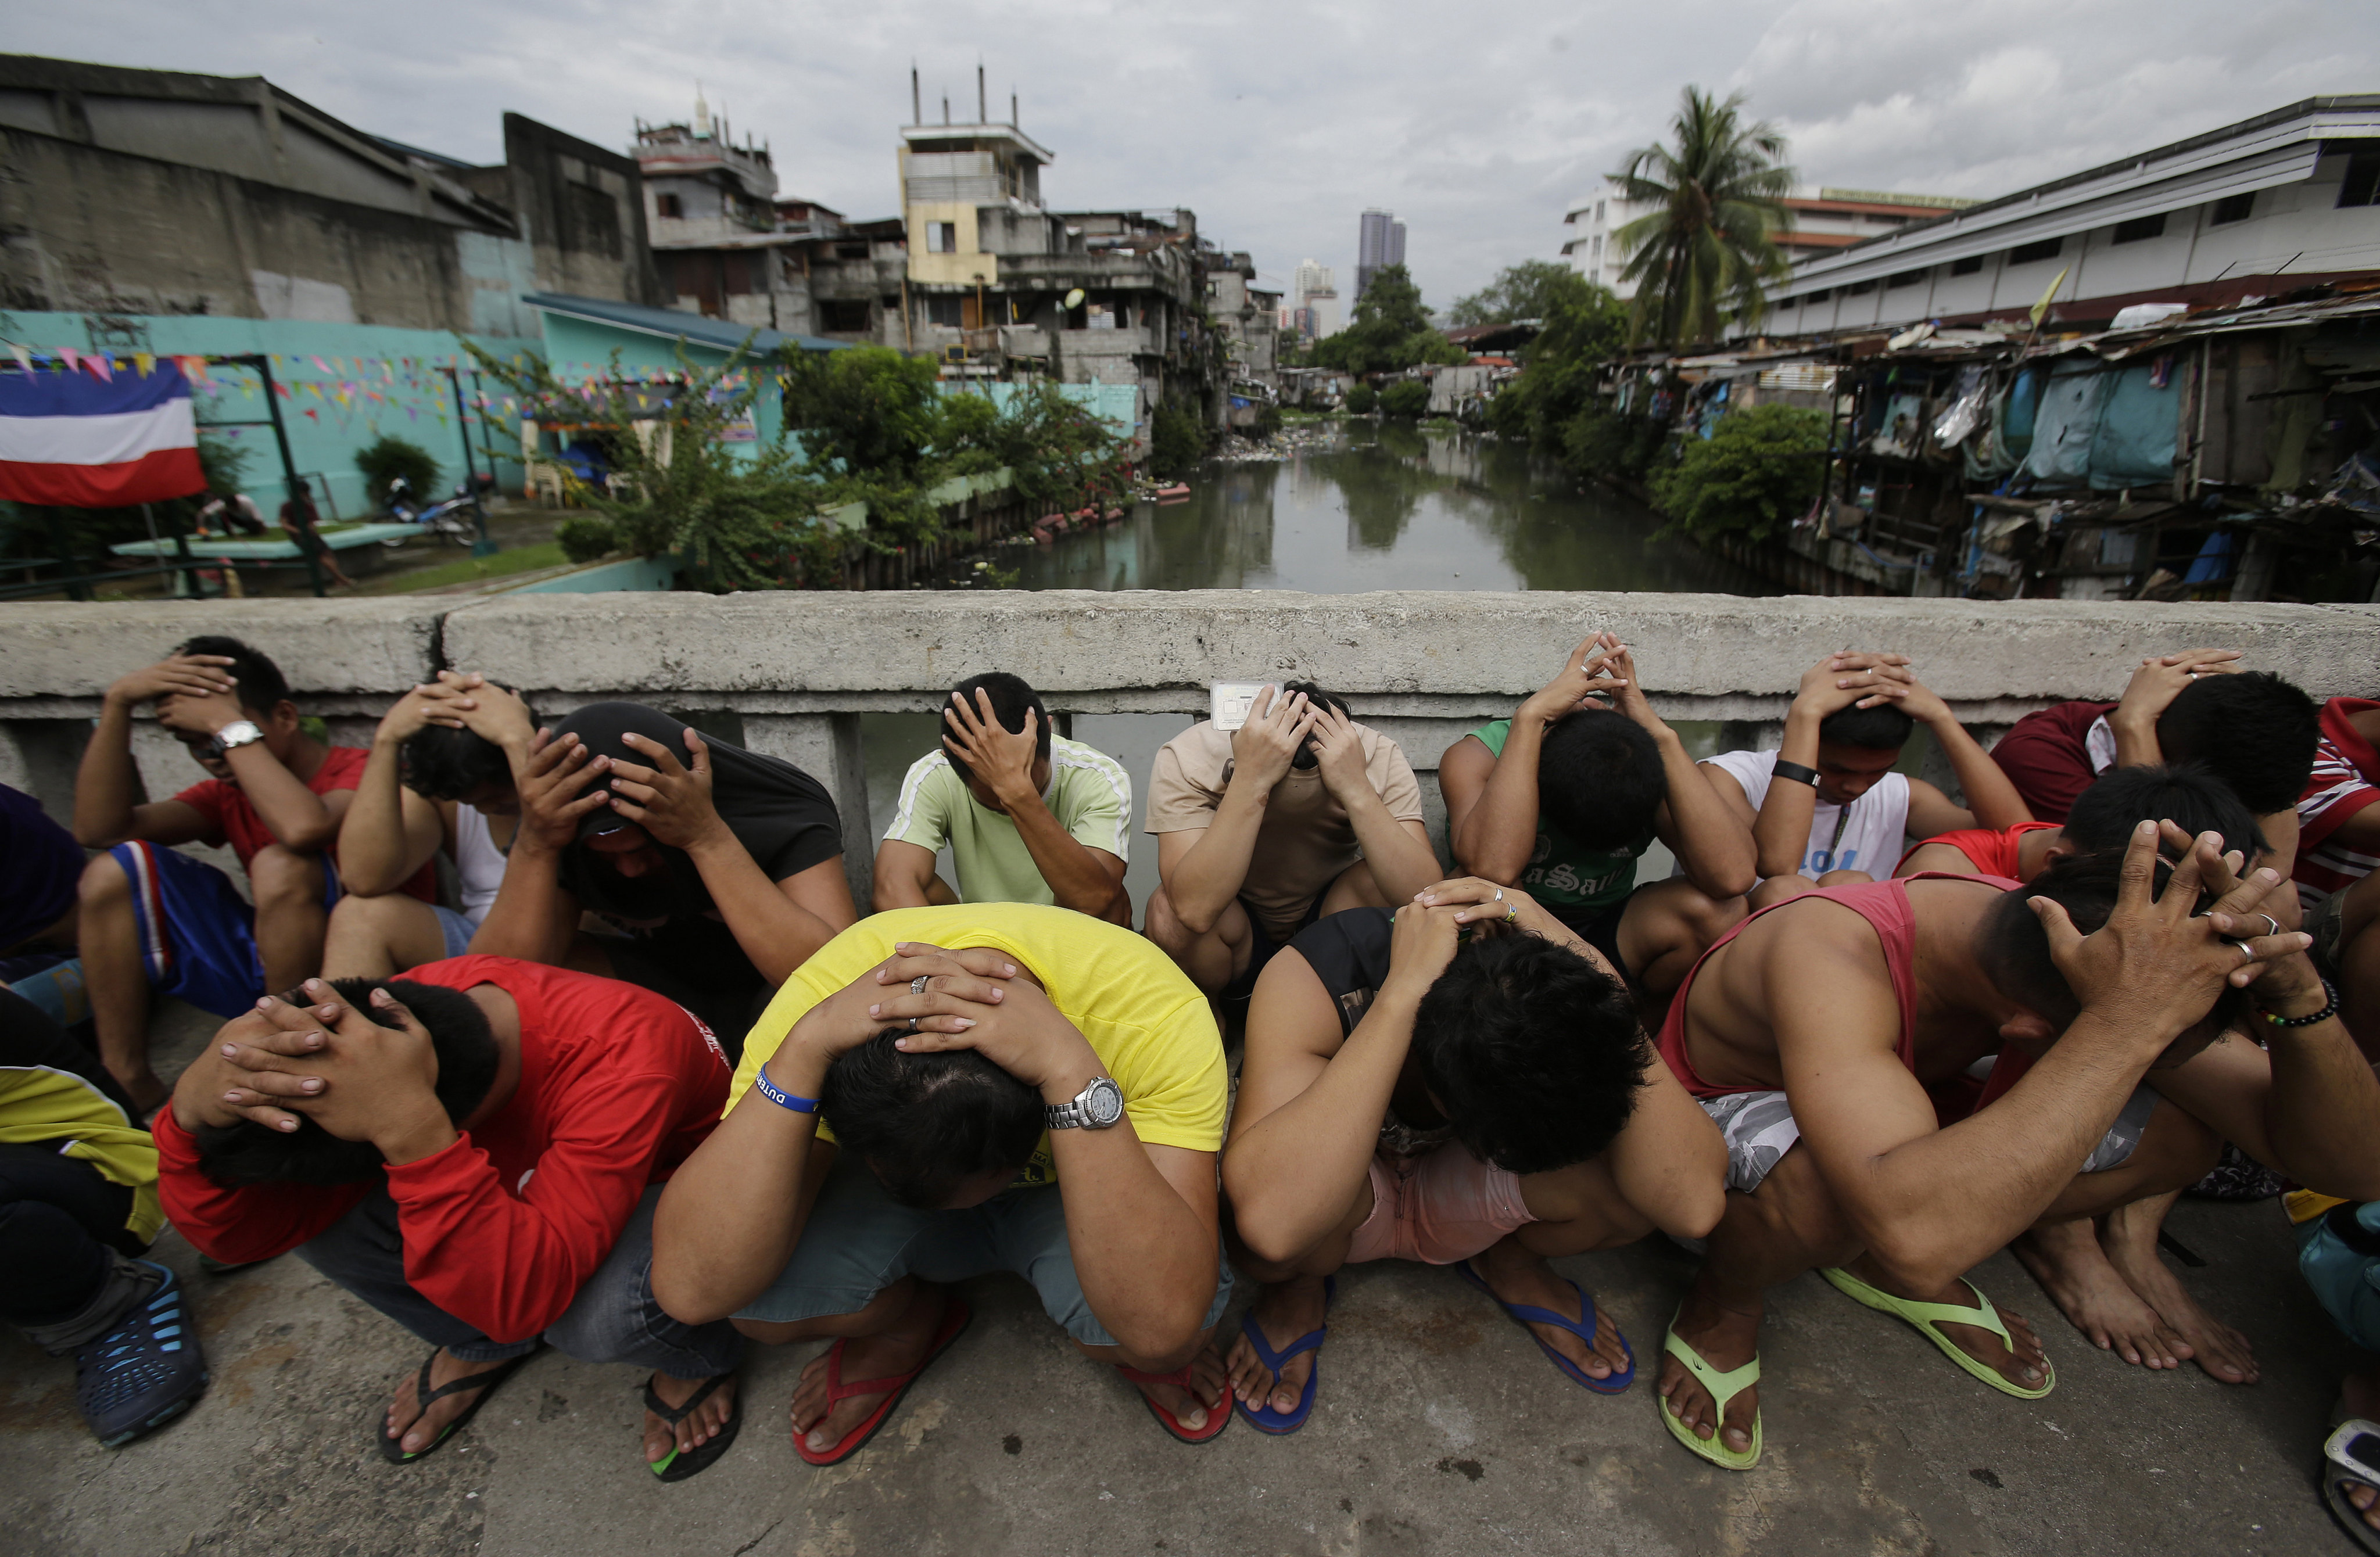 Filipino men rounded up during the “War on Drugs” campaign of former President Rodrigo Duterte. Photo: AP